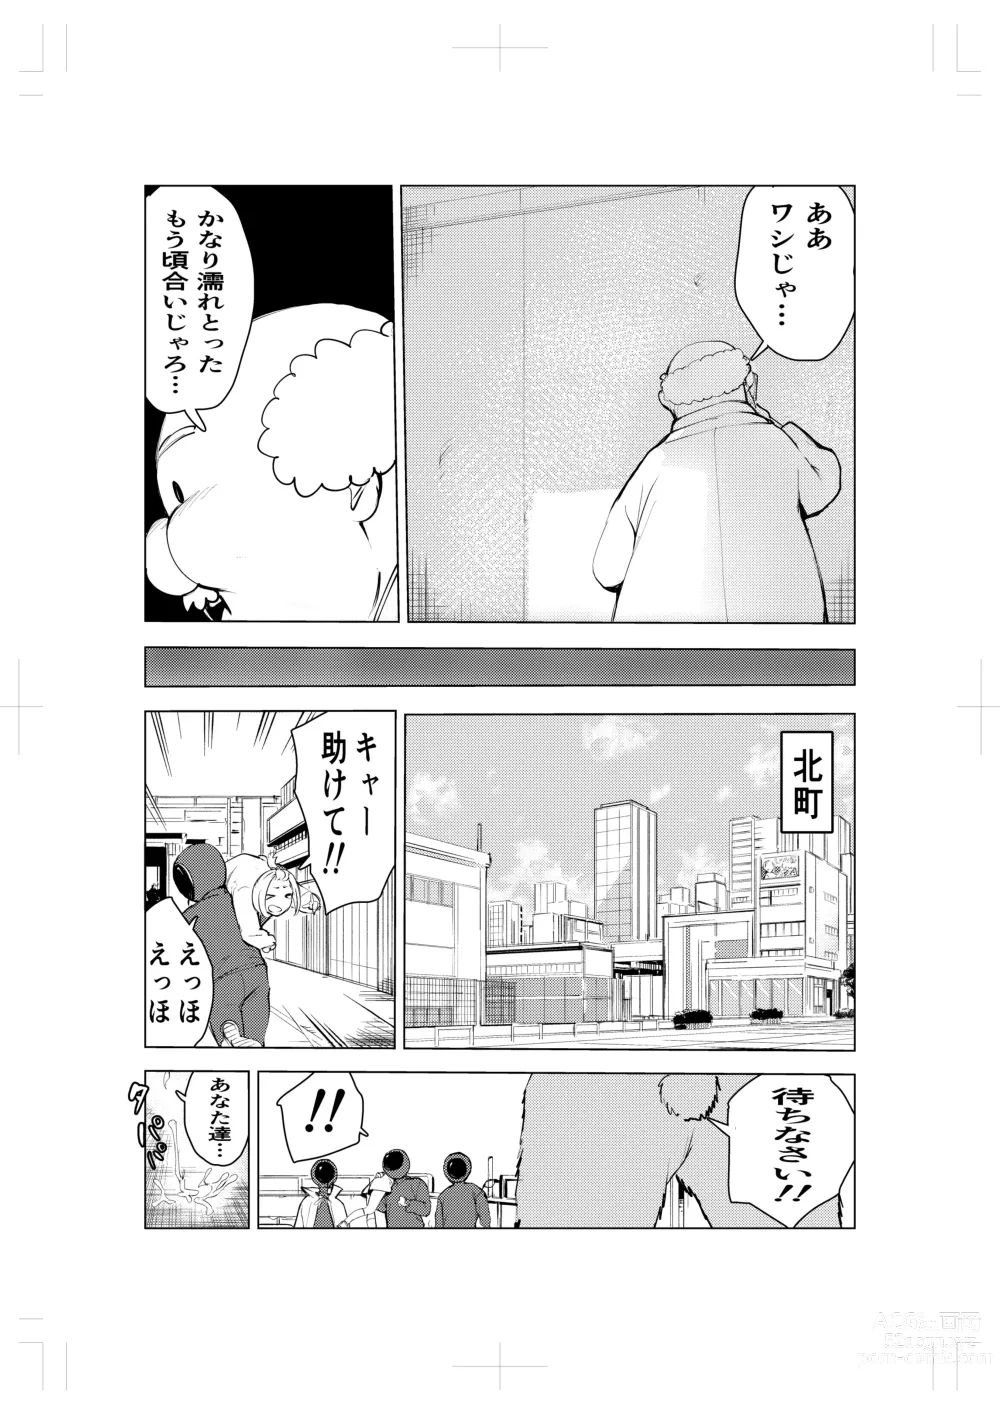 Page 10 of doujinshi Kigurumi niku manjū